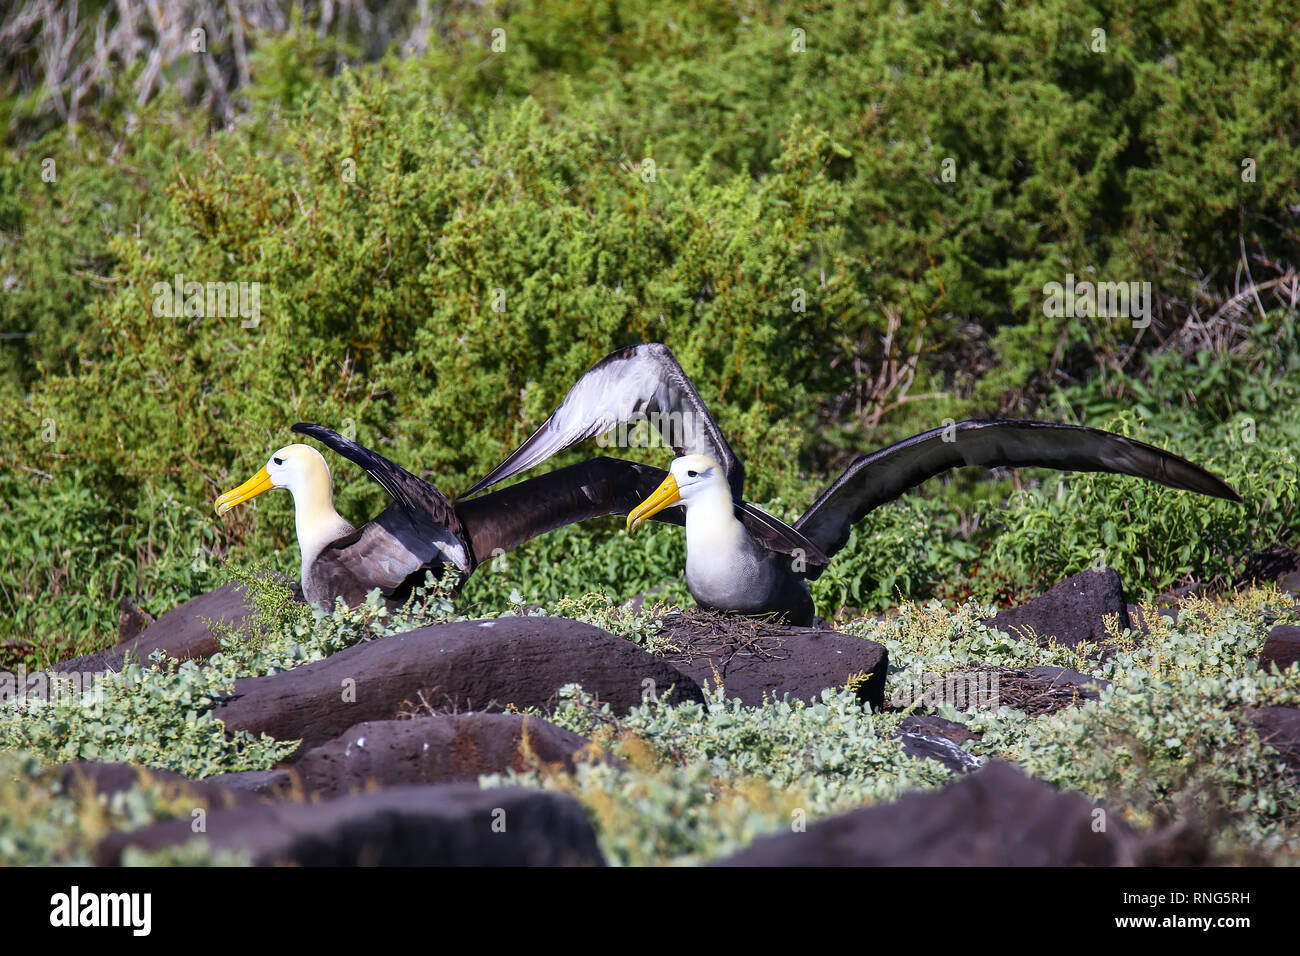 Winkte Albatrosse tun courtship Ritual am Espanola Island, Galapagos, Ecuador. Die winkte Albatross Rassen vor allem auf Espanola Island Stockfoto